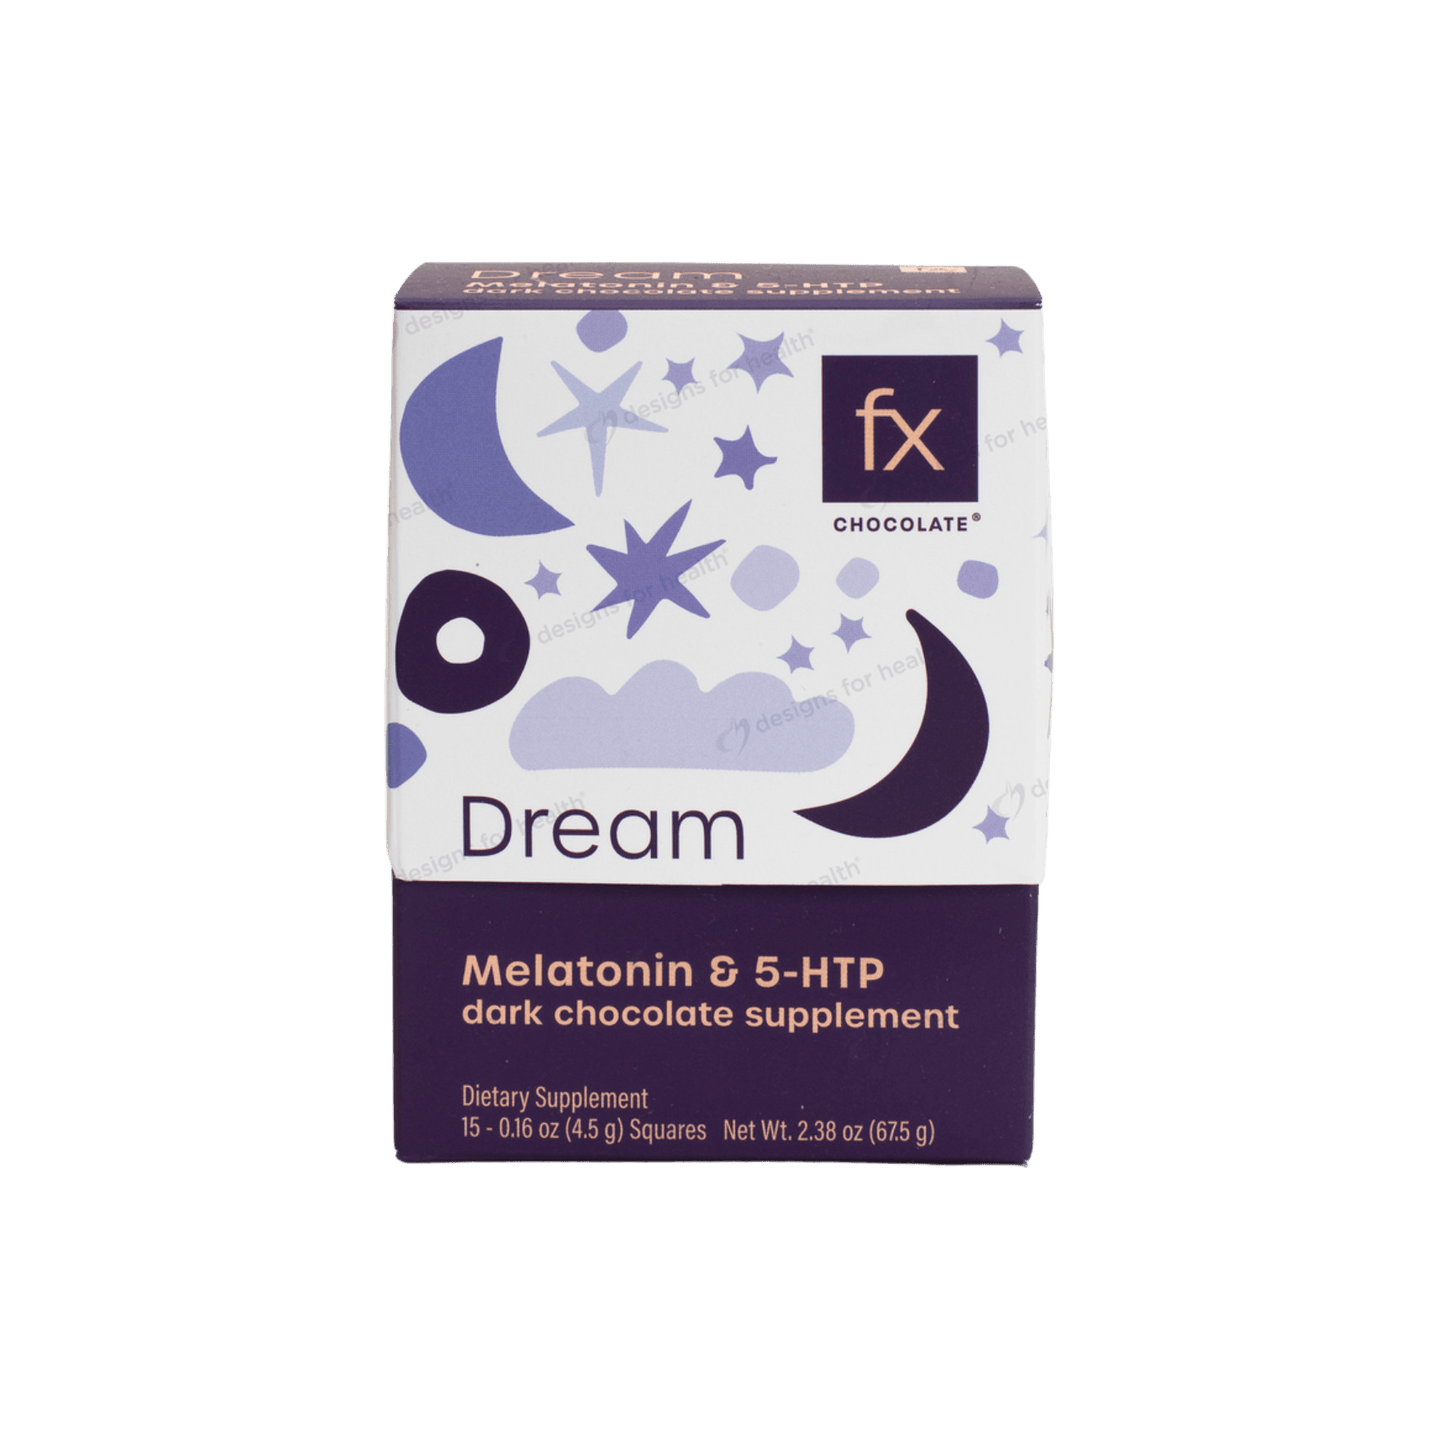 Designs for Health Fx Chocolate Dream